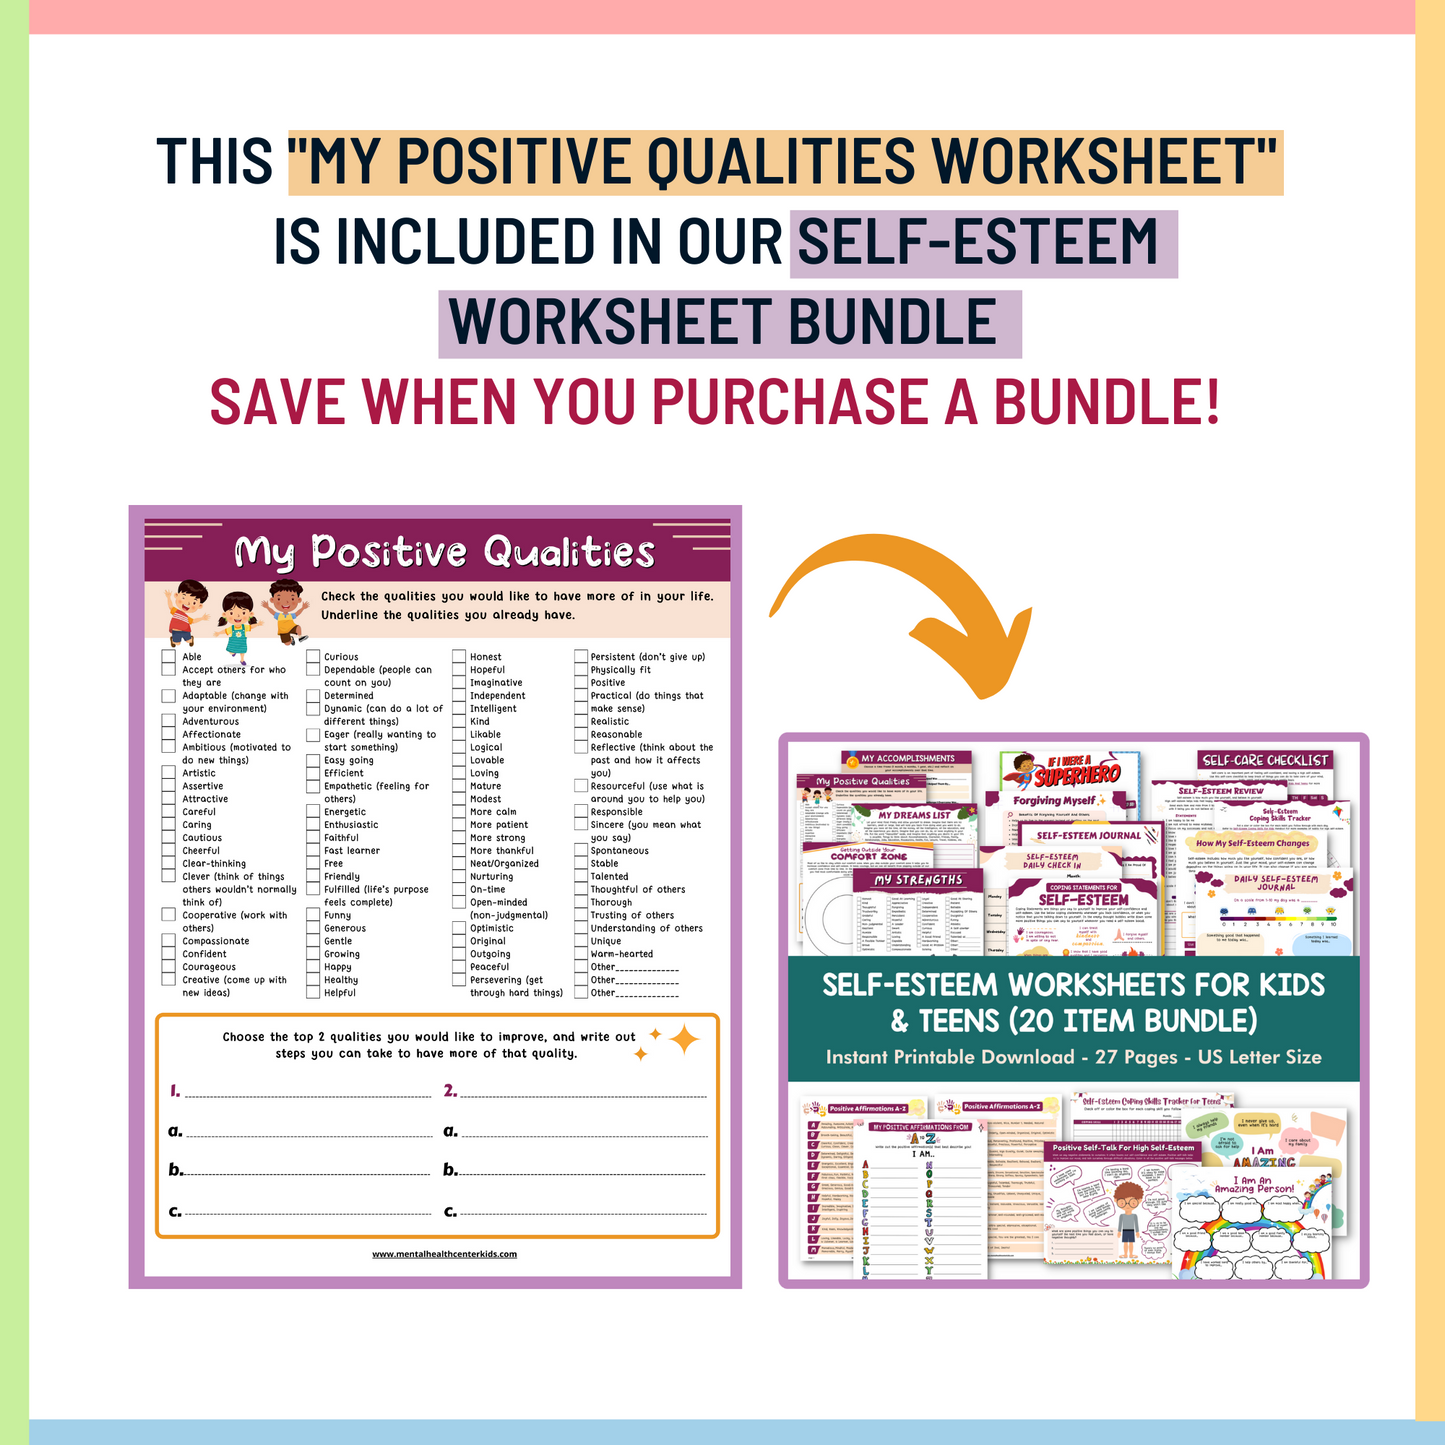 My Positive Qualities Worksheet